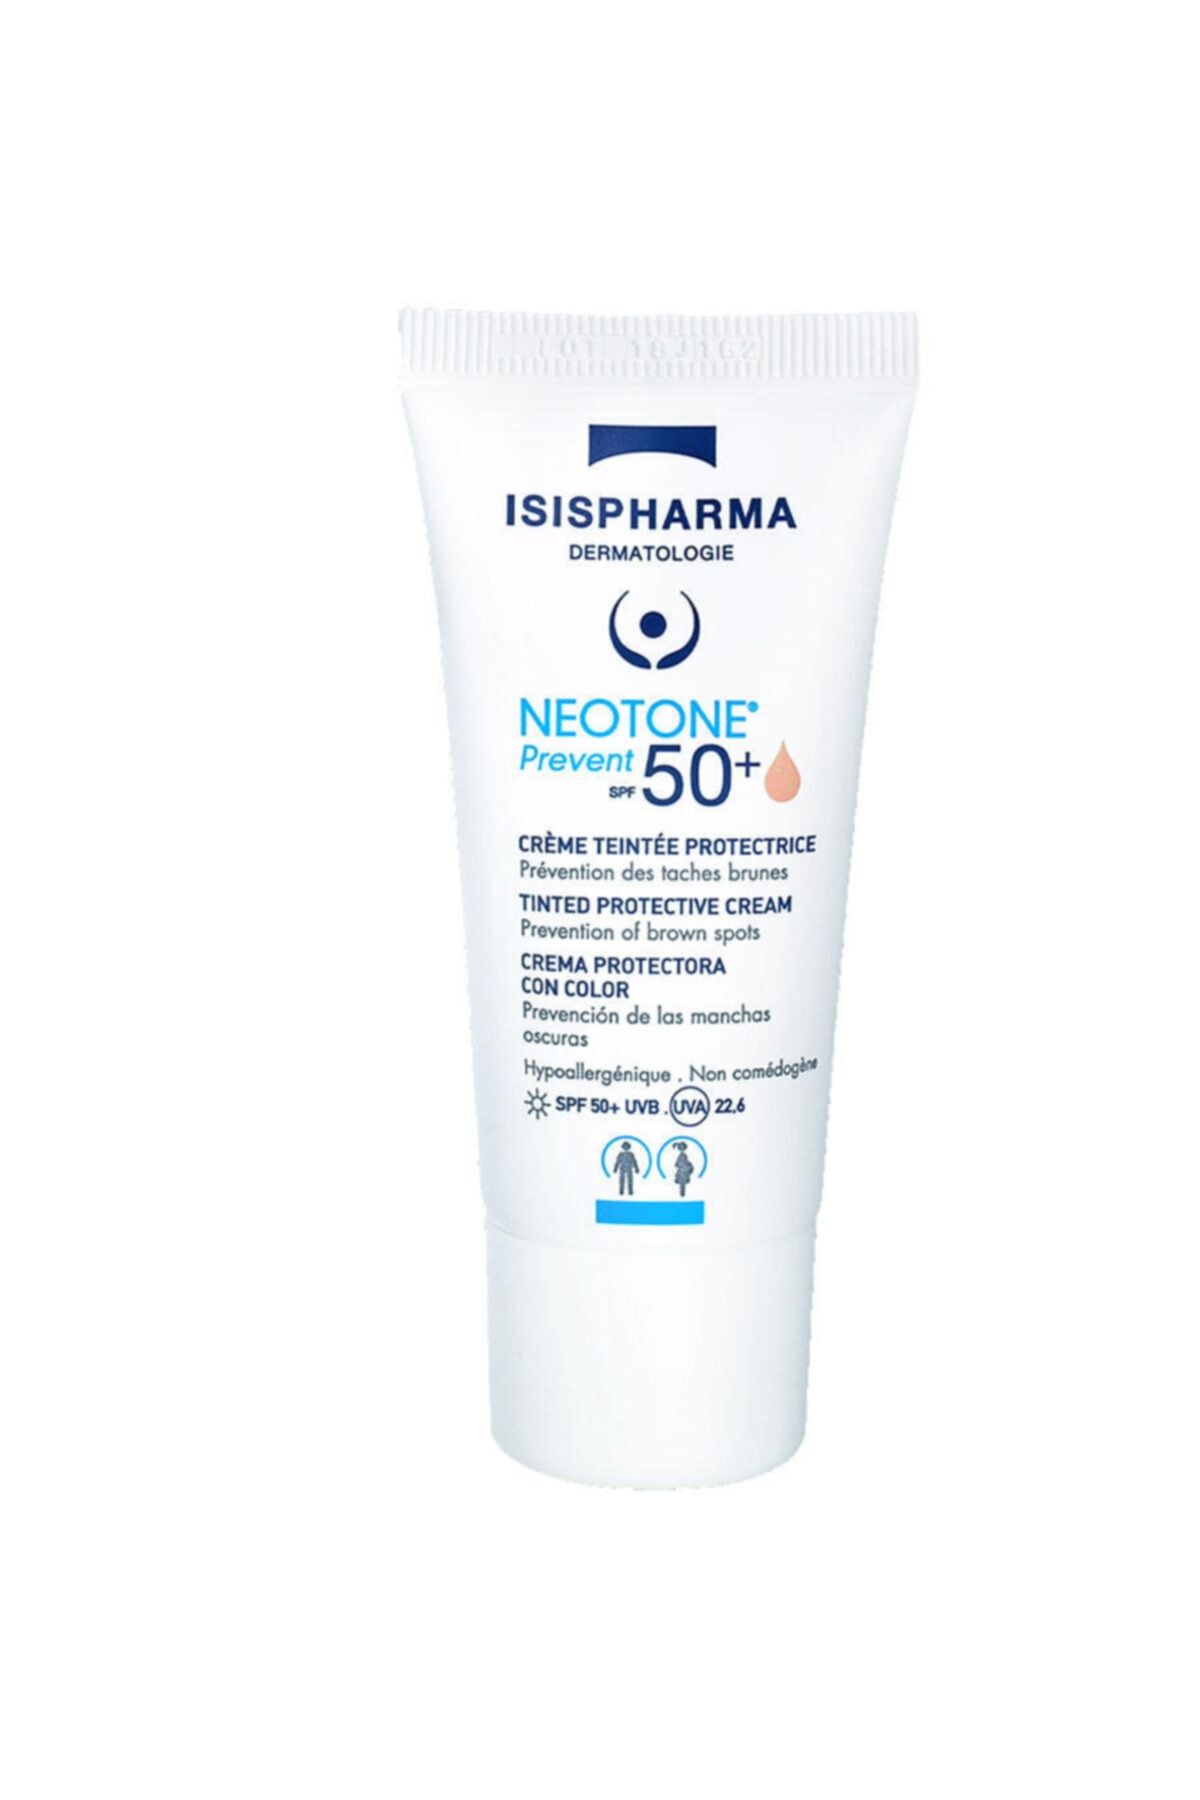 ISIS PHARMA Neotone Prevent Spf50+ Mineral Tınted Cream 30ml